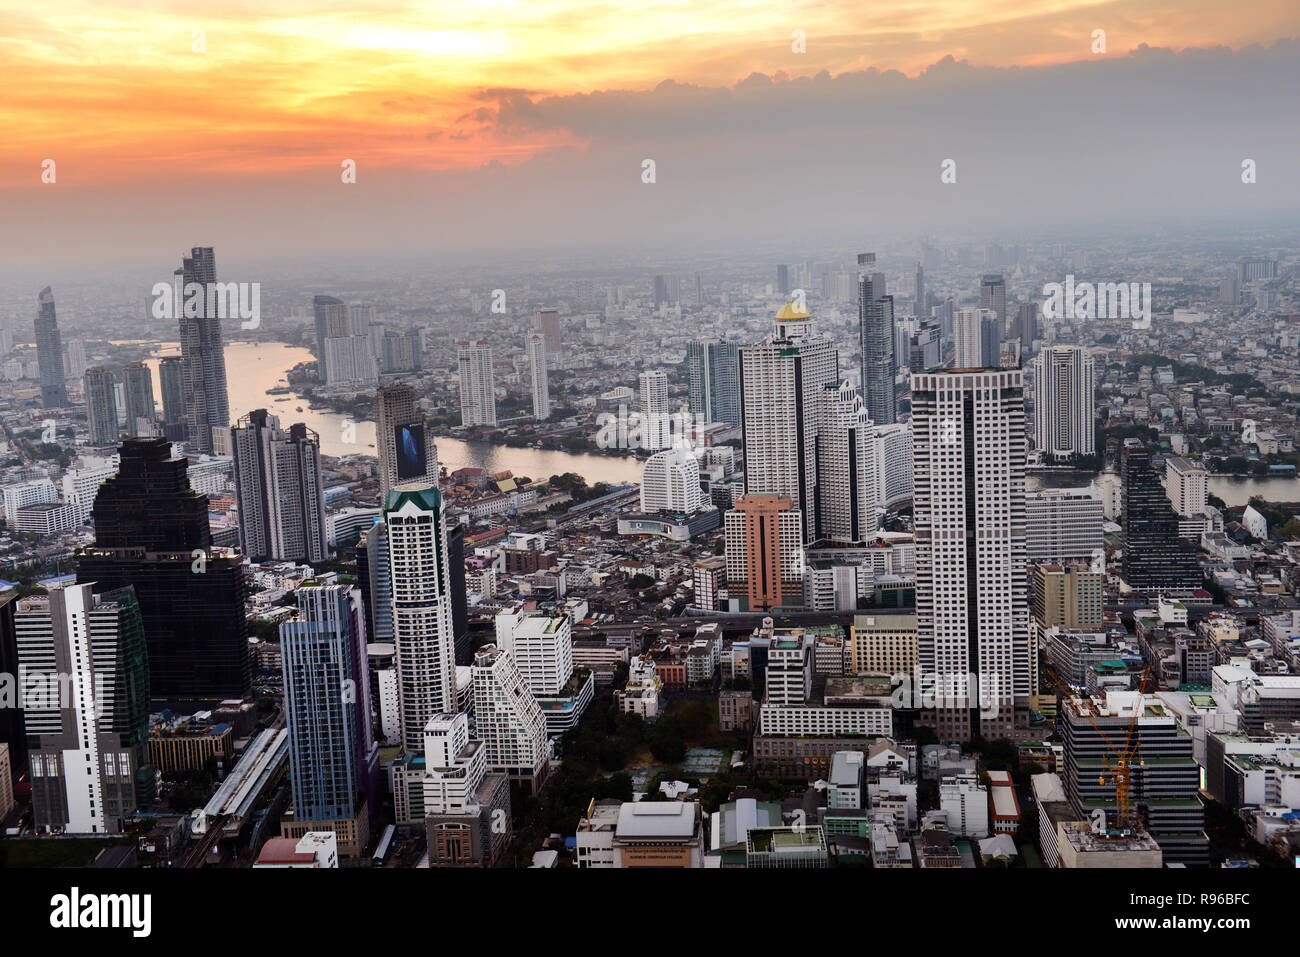 Sunset over the Chao Phraya River with beautiful city views of Bangkok. Stock Photo